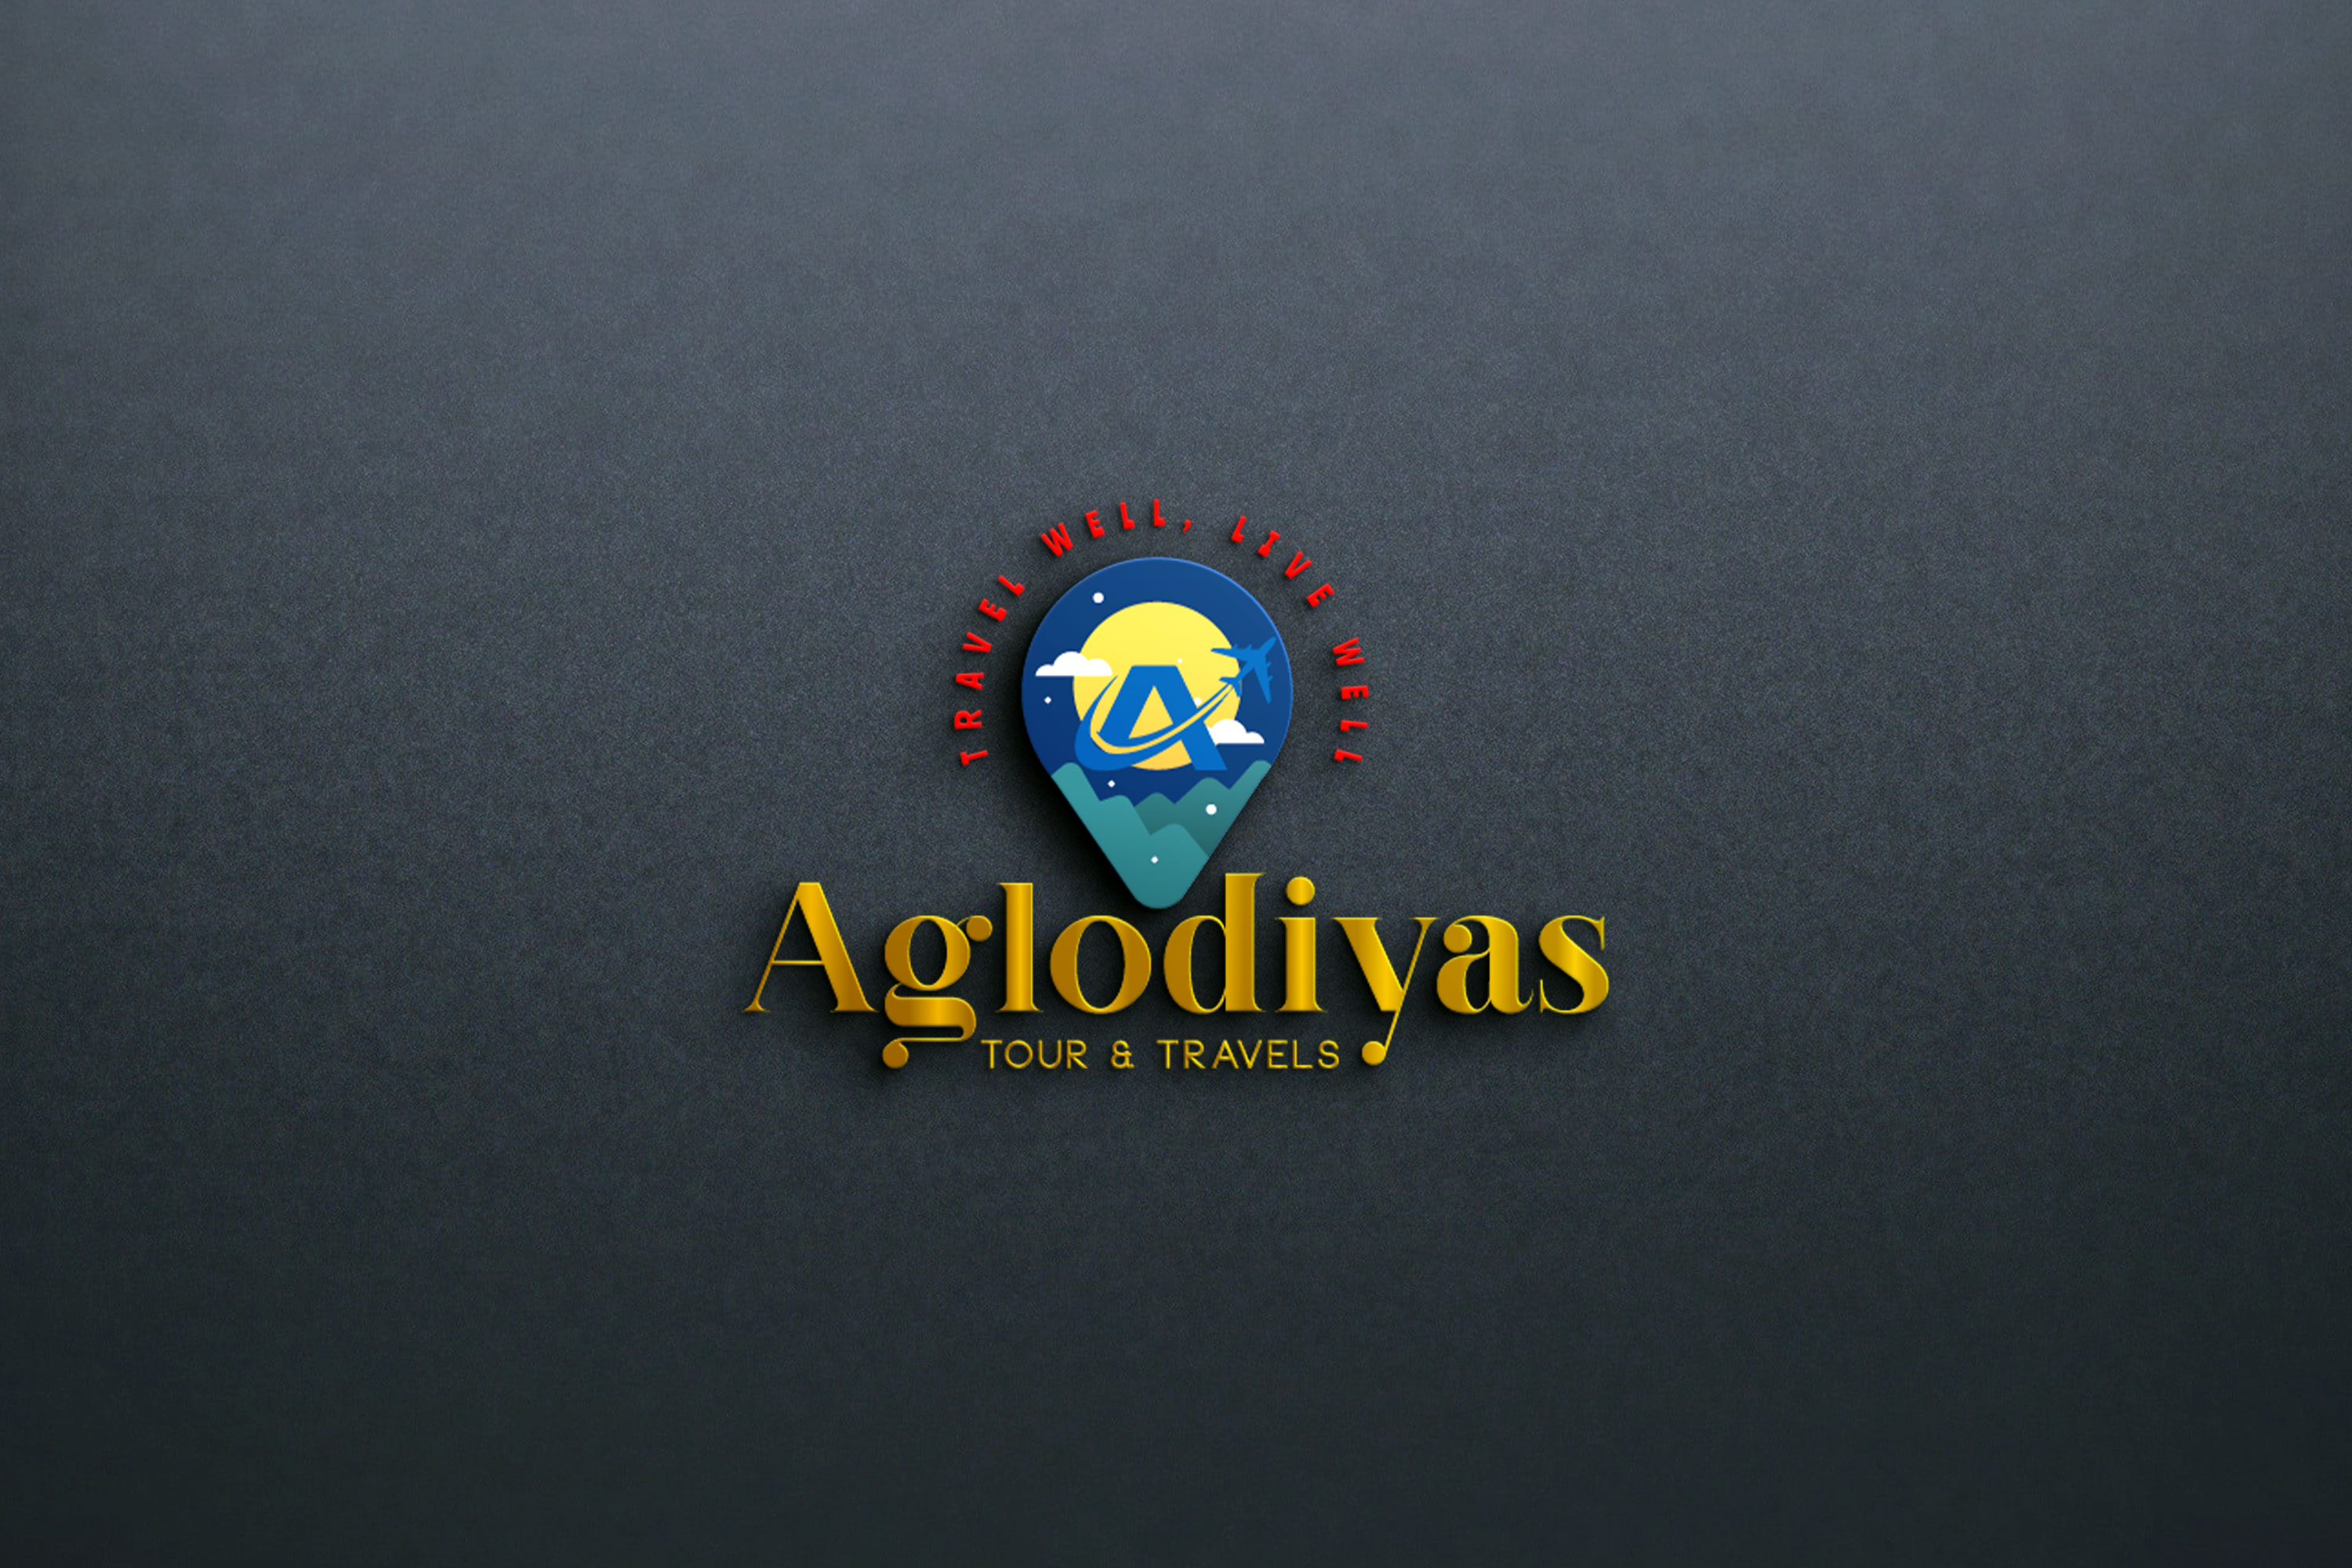 Aglodiyas Tour & Travels